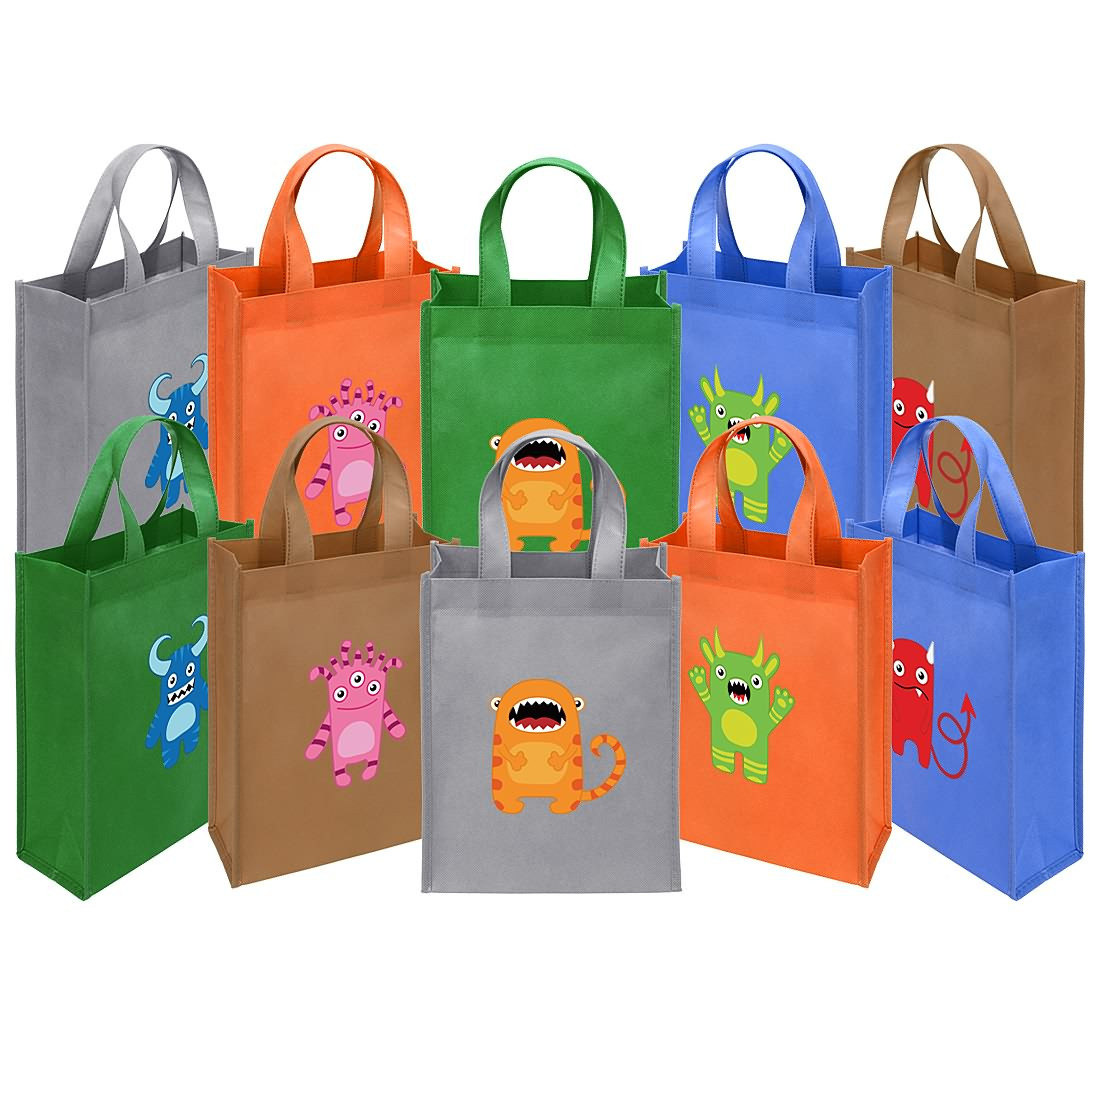 Gift Bags For Kids
 Ava & Kings 10 Pack Reusable Party Favor Goo Bags for